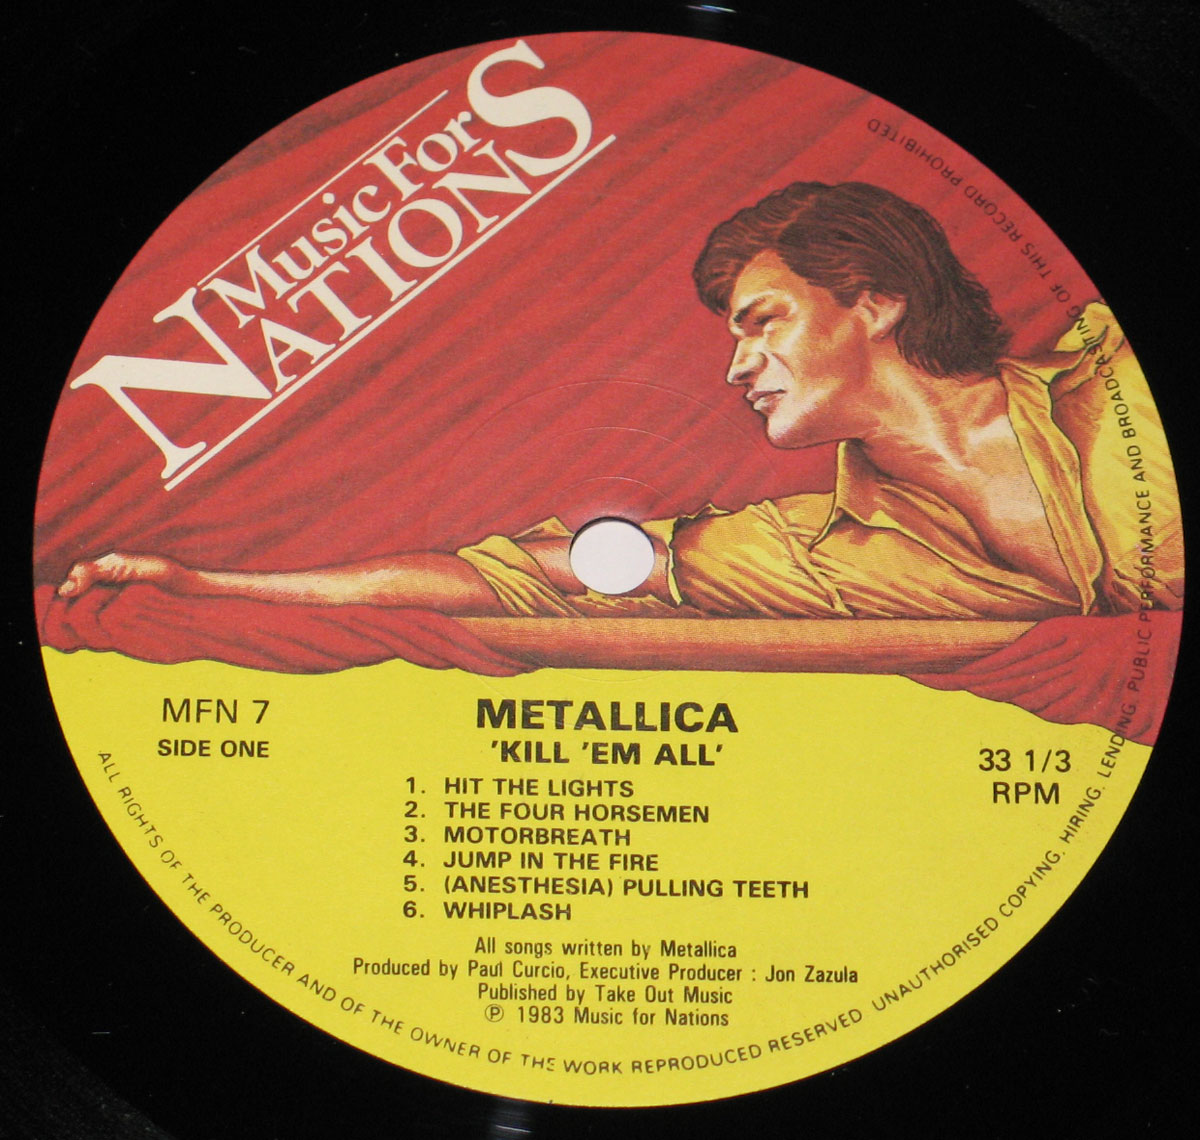 High Resolution Photo Metallica Kill 'Em All France MFN   Vinyl Record